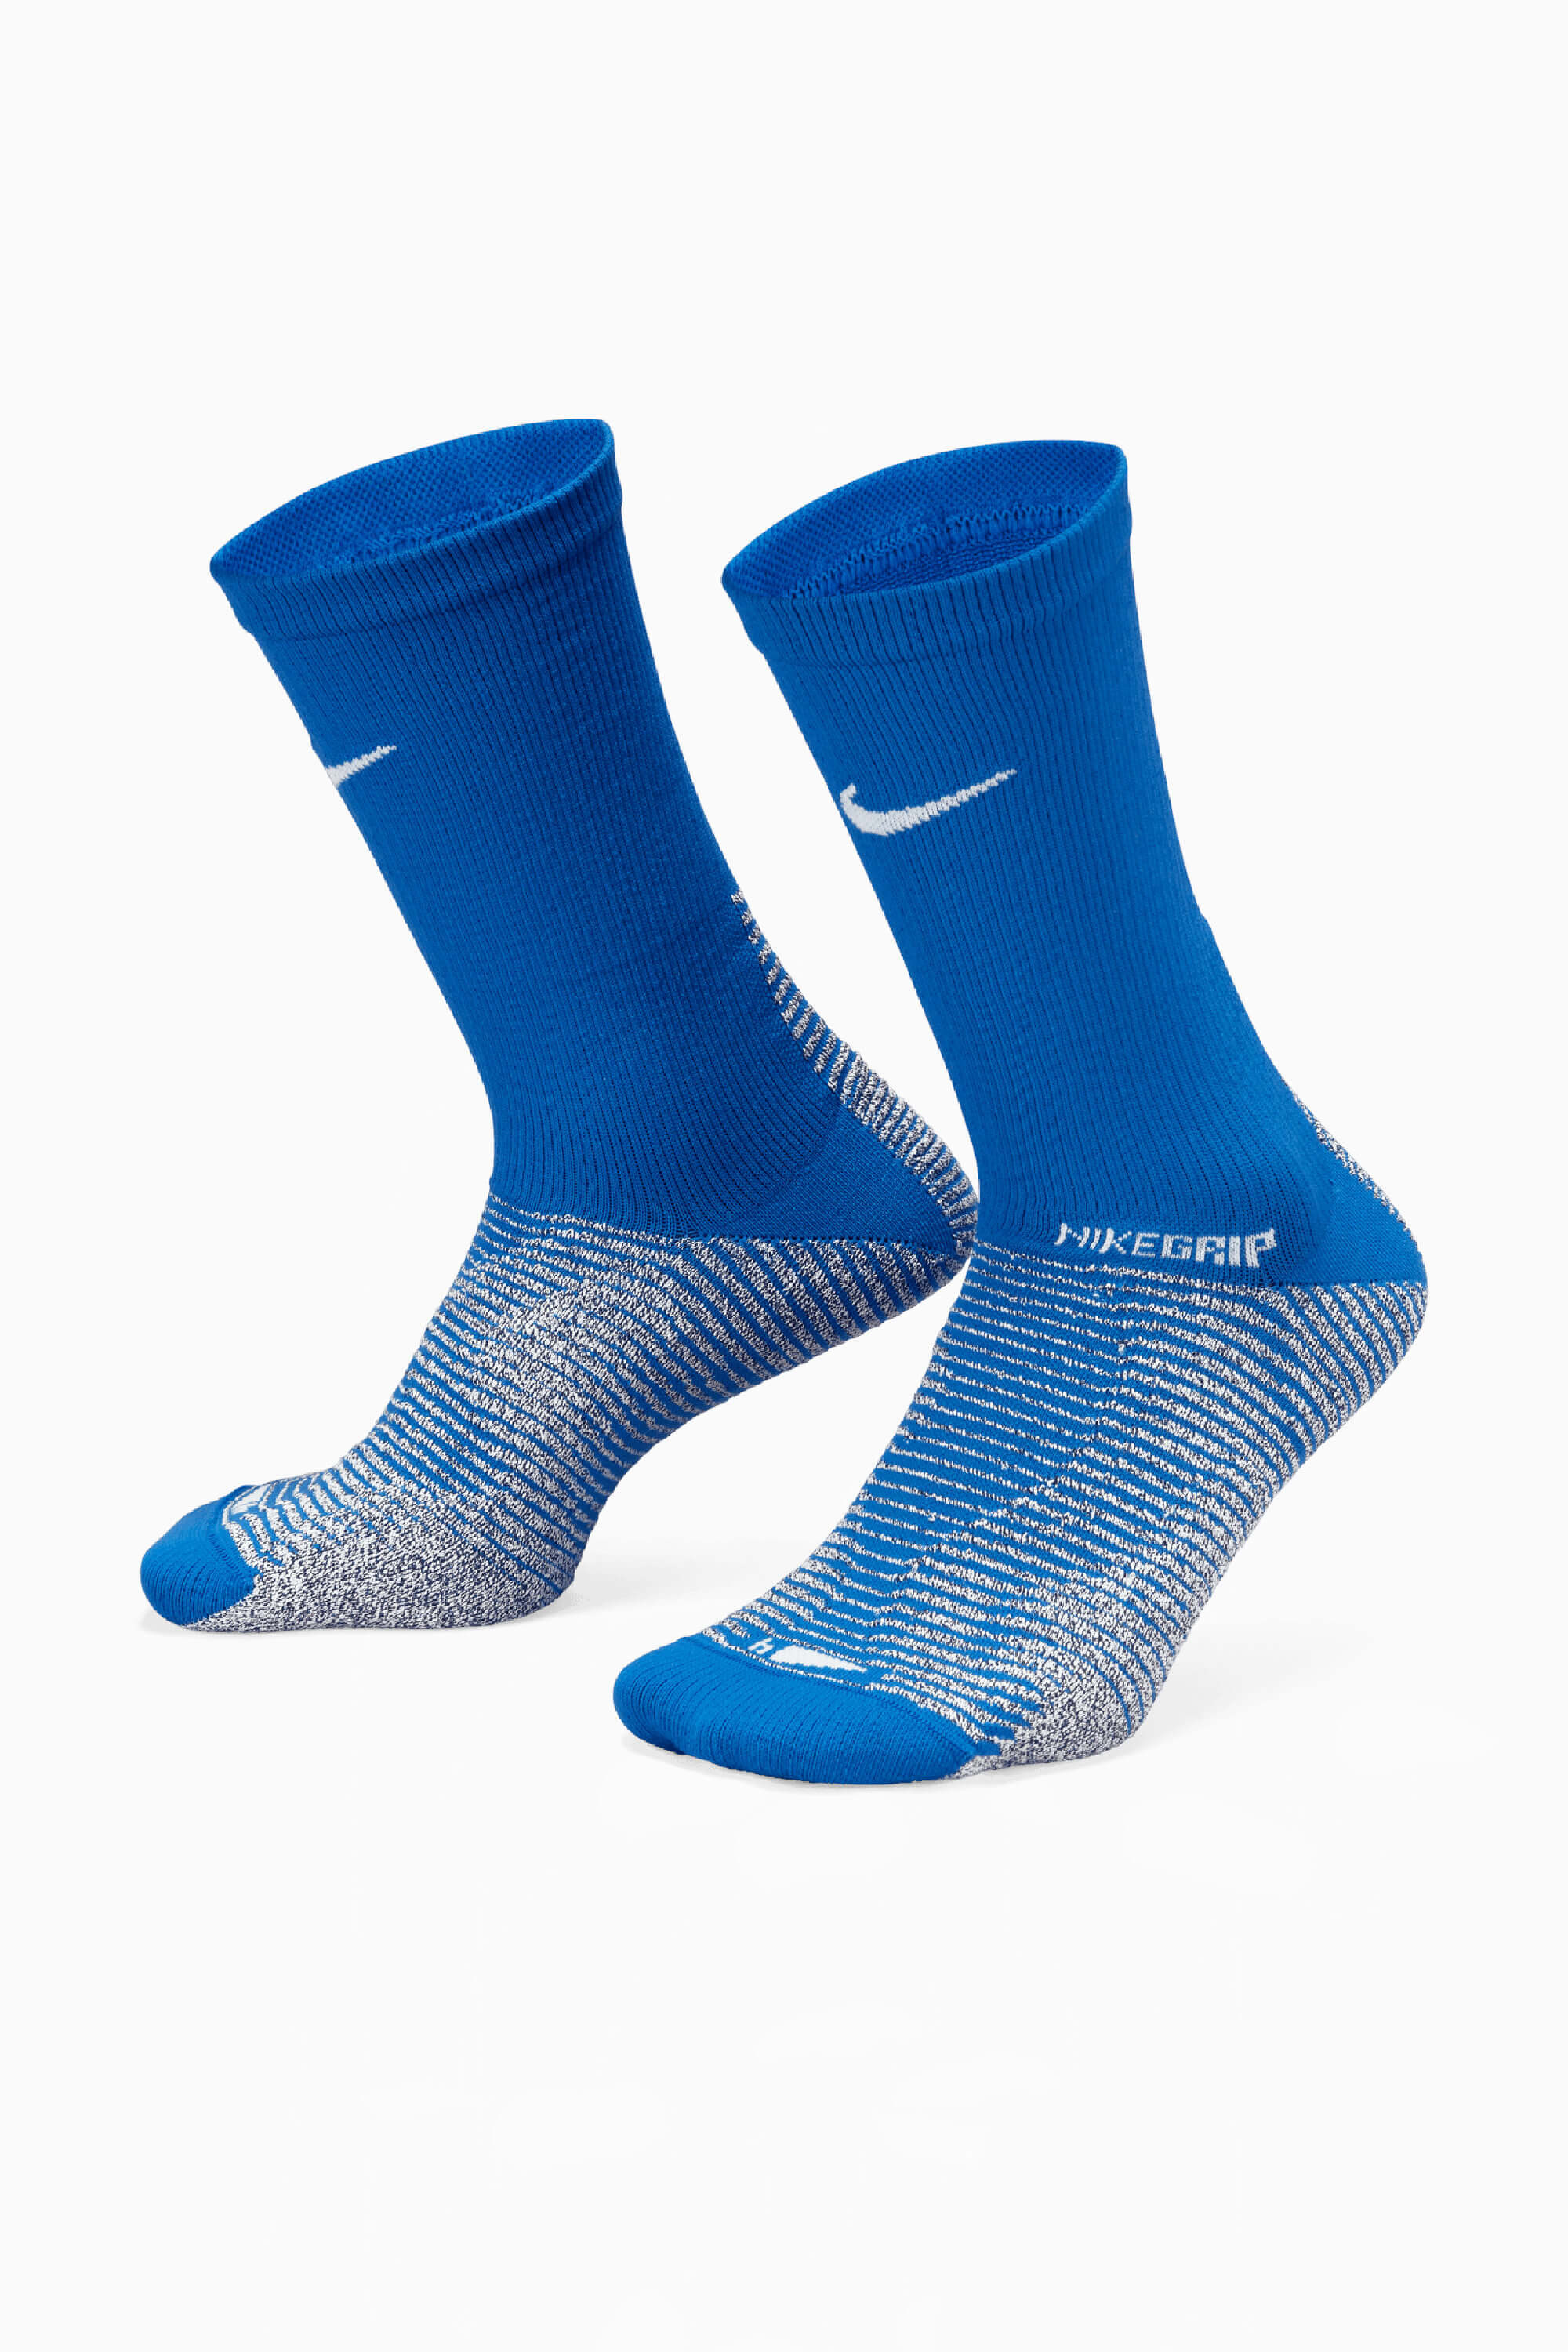 Socks Nike Grip Strike Light Crew   - Football boots & equipment